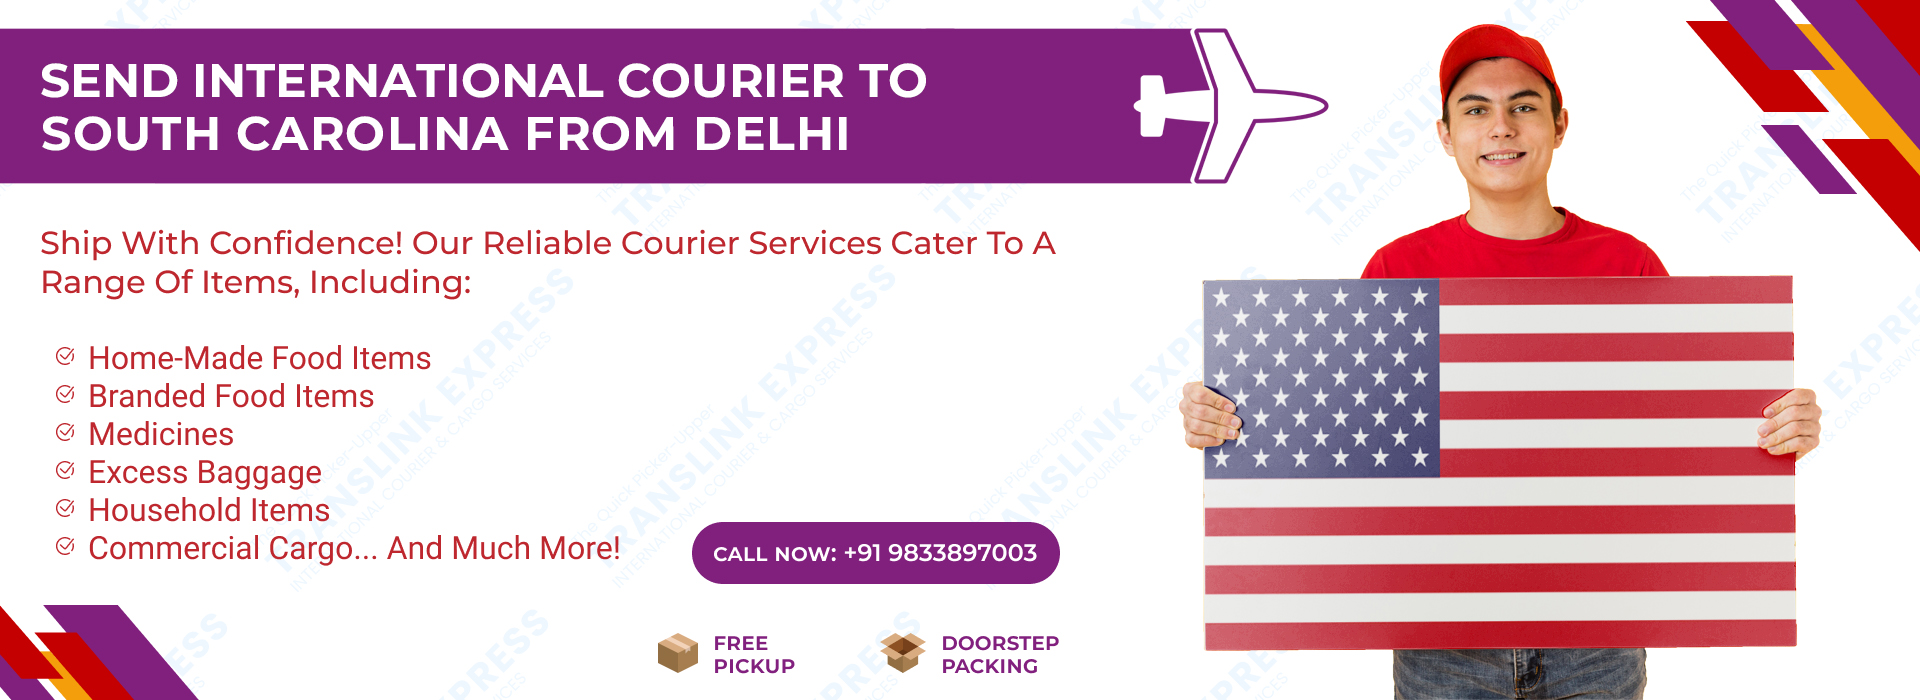 Courier to South Carolina From Delhi